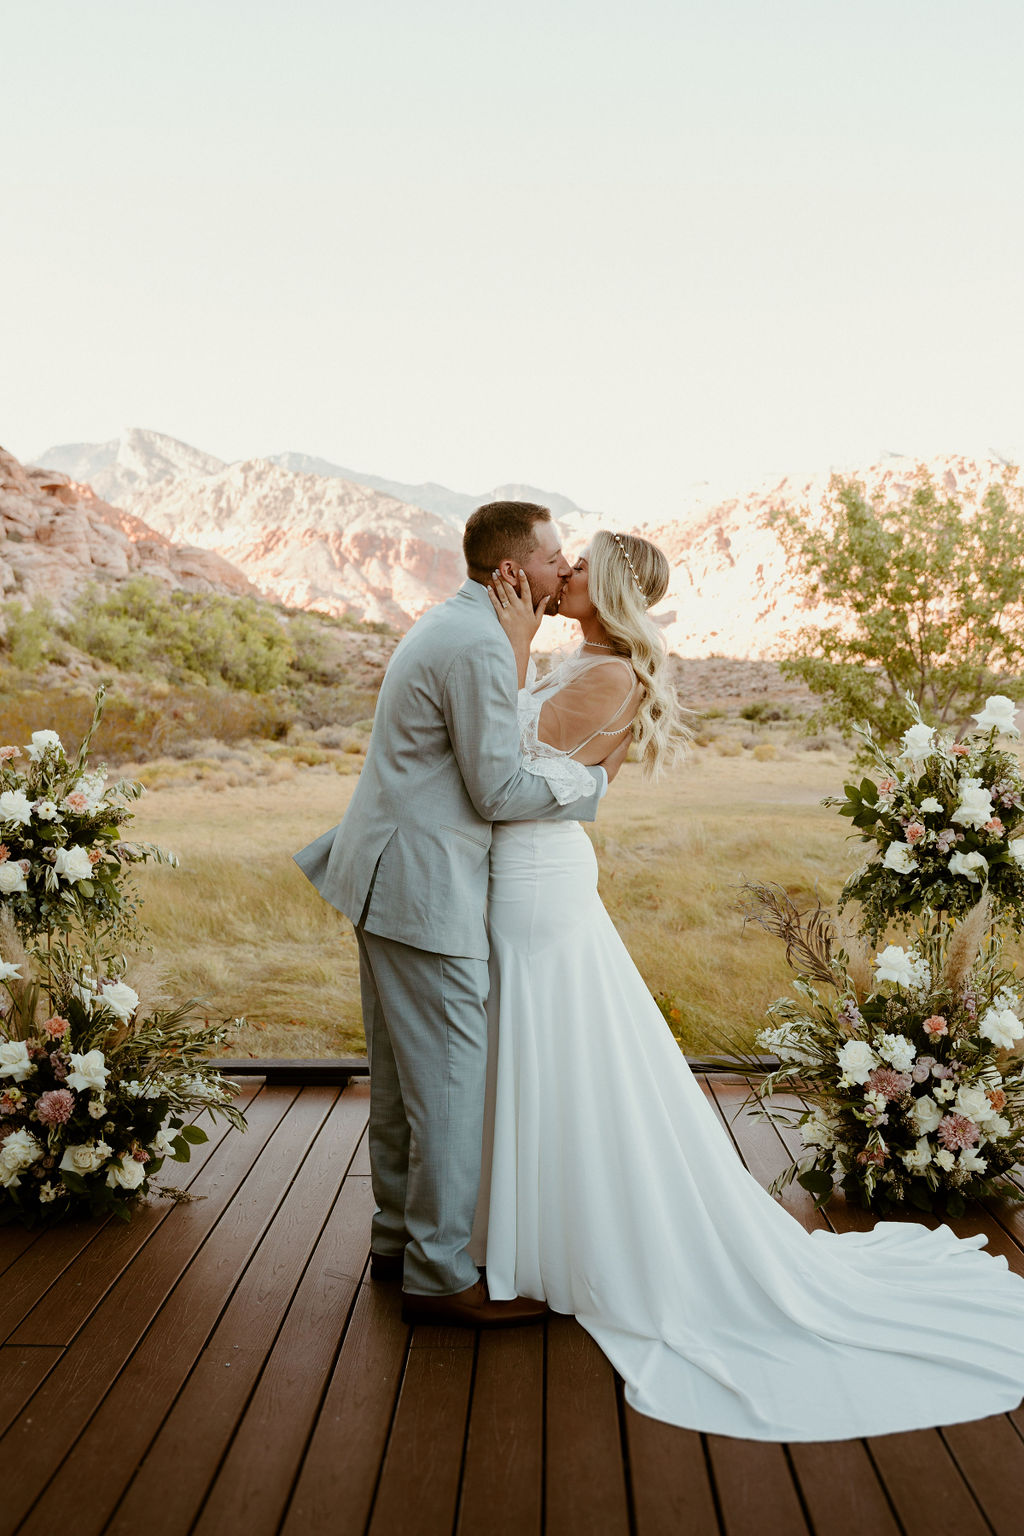 Red Rock Desert & Neon Vegas Lights. Newlyweds have their first kiss 